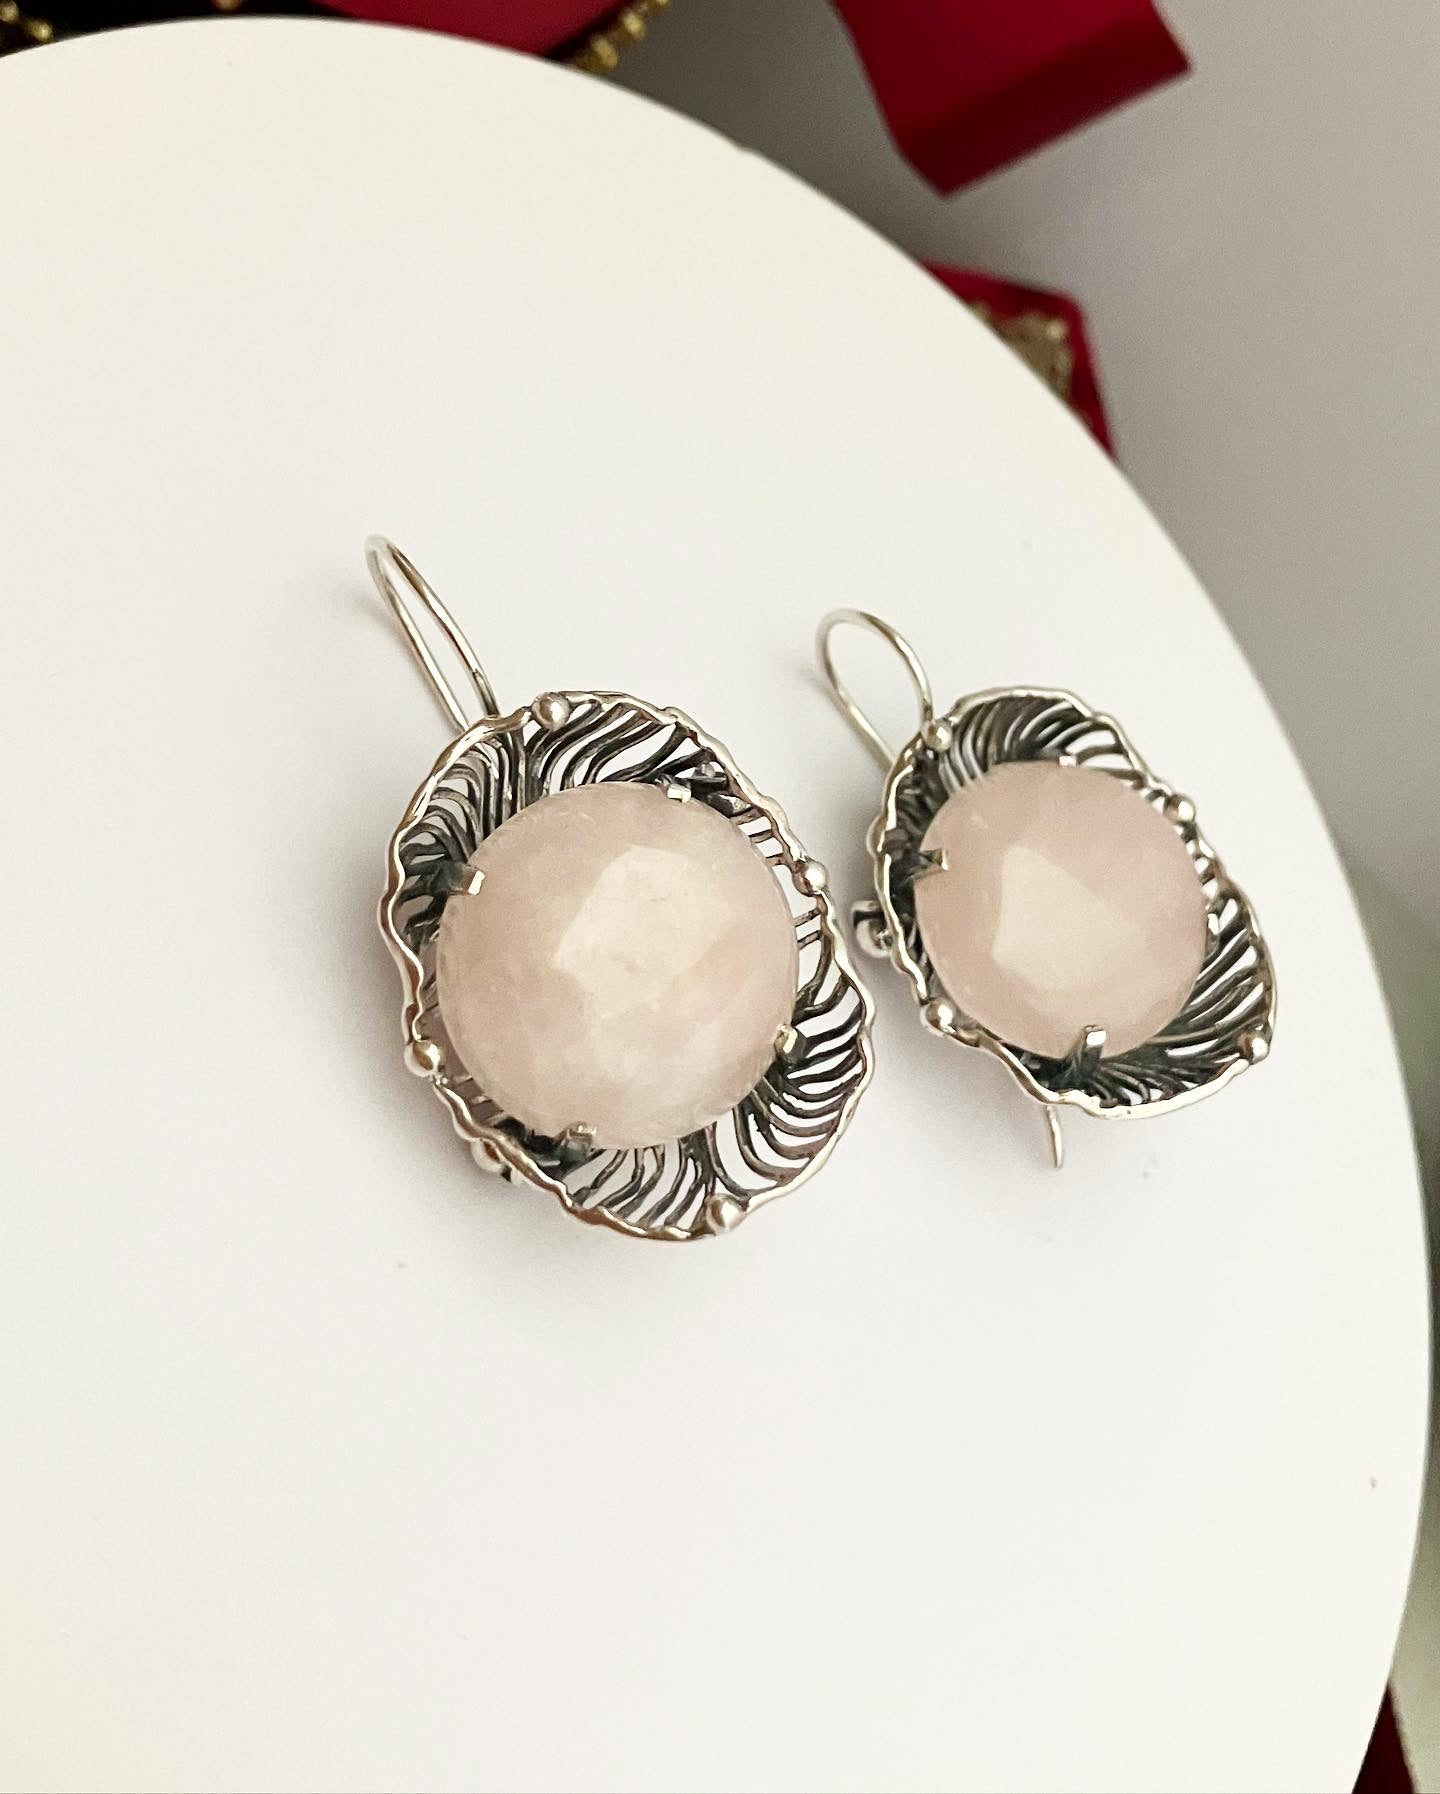 Earrings with rose quartz